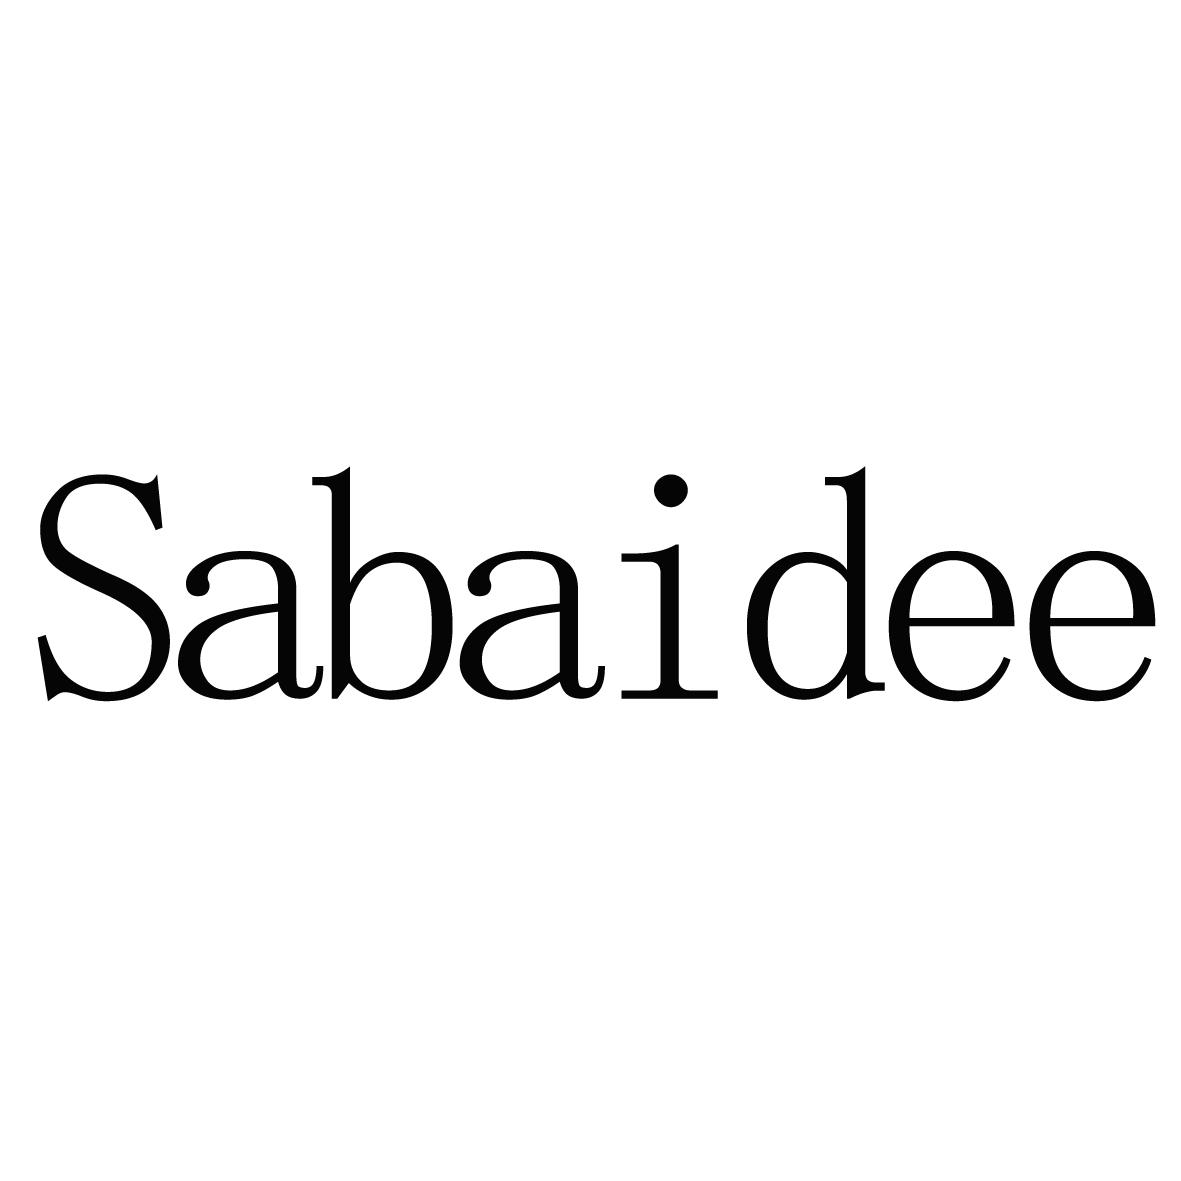 SABAIDEE